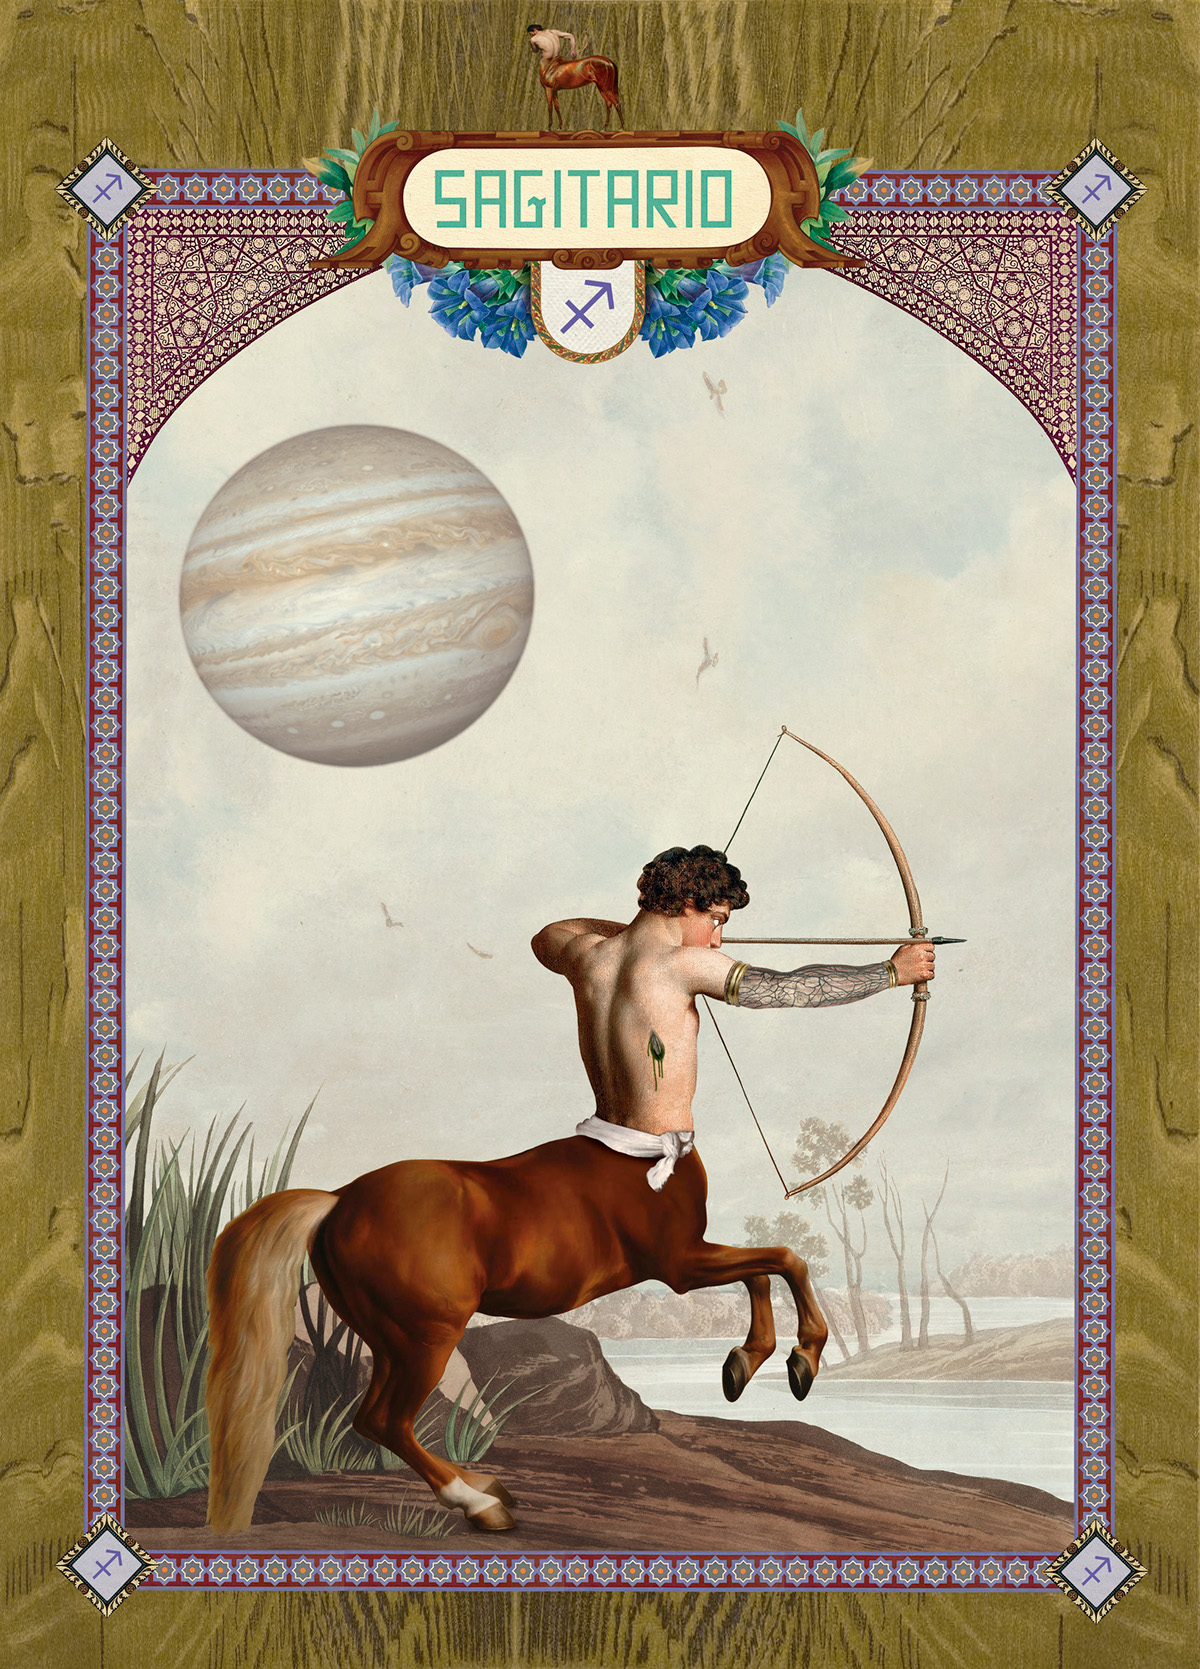 Digital Collage collage zodiac mythology vintage frame series animal God Victorian fantasy mitologia fantasia Horoscopo